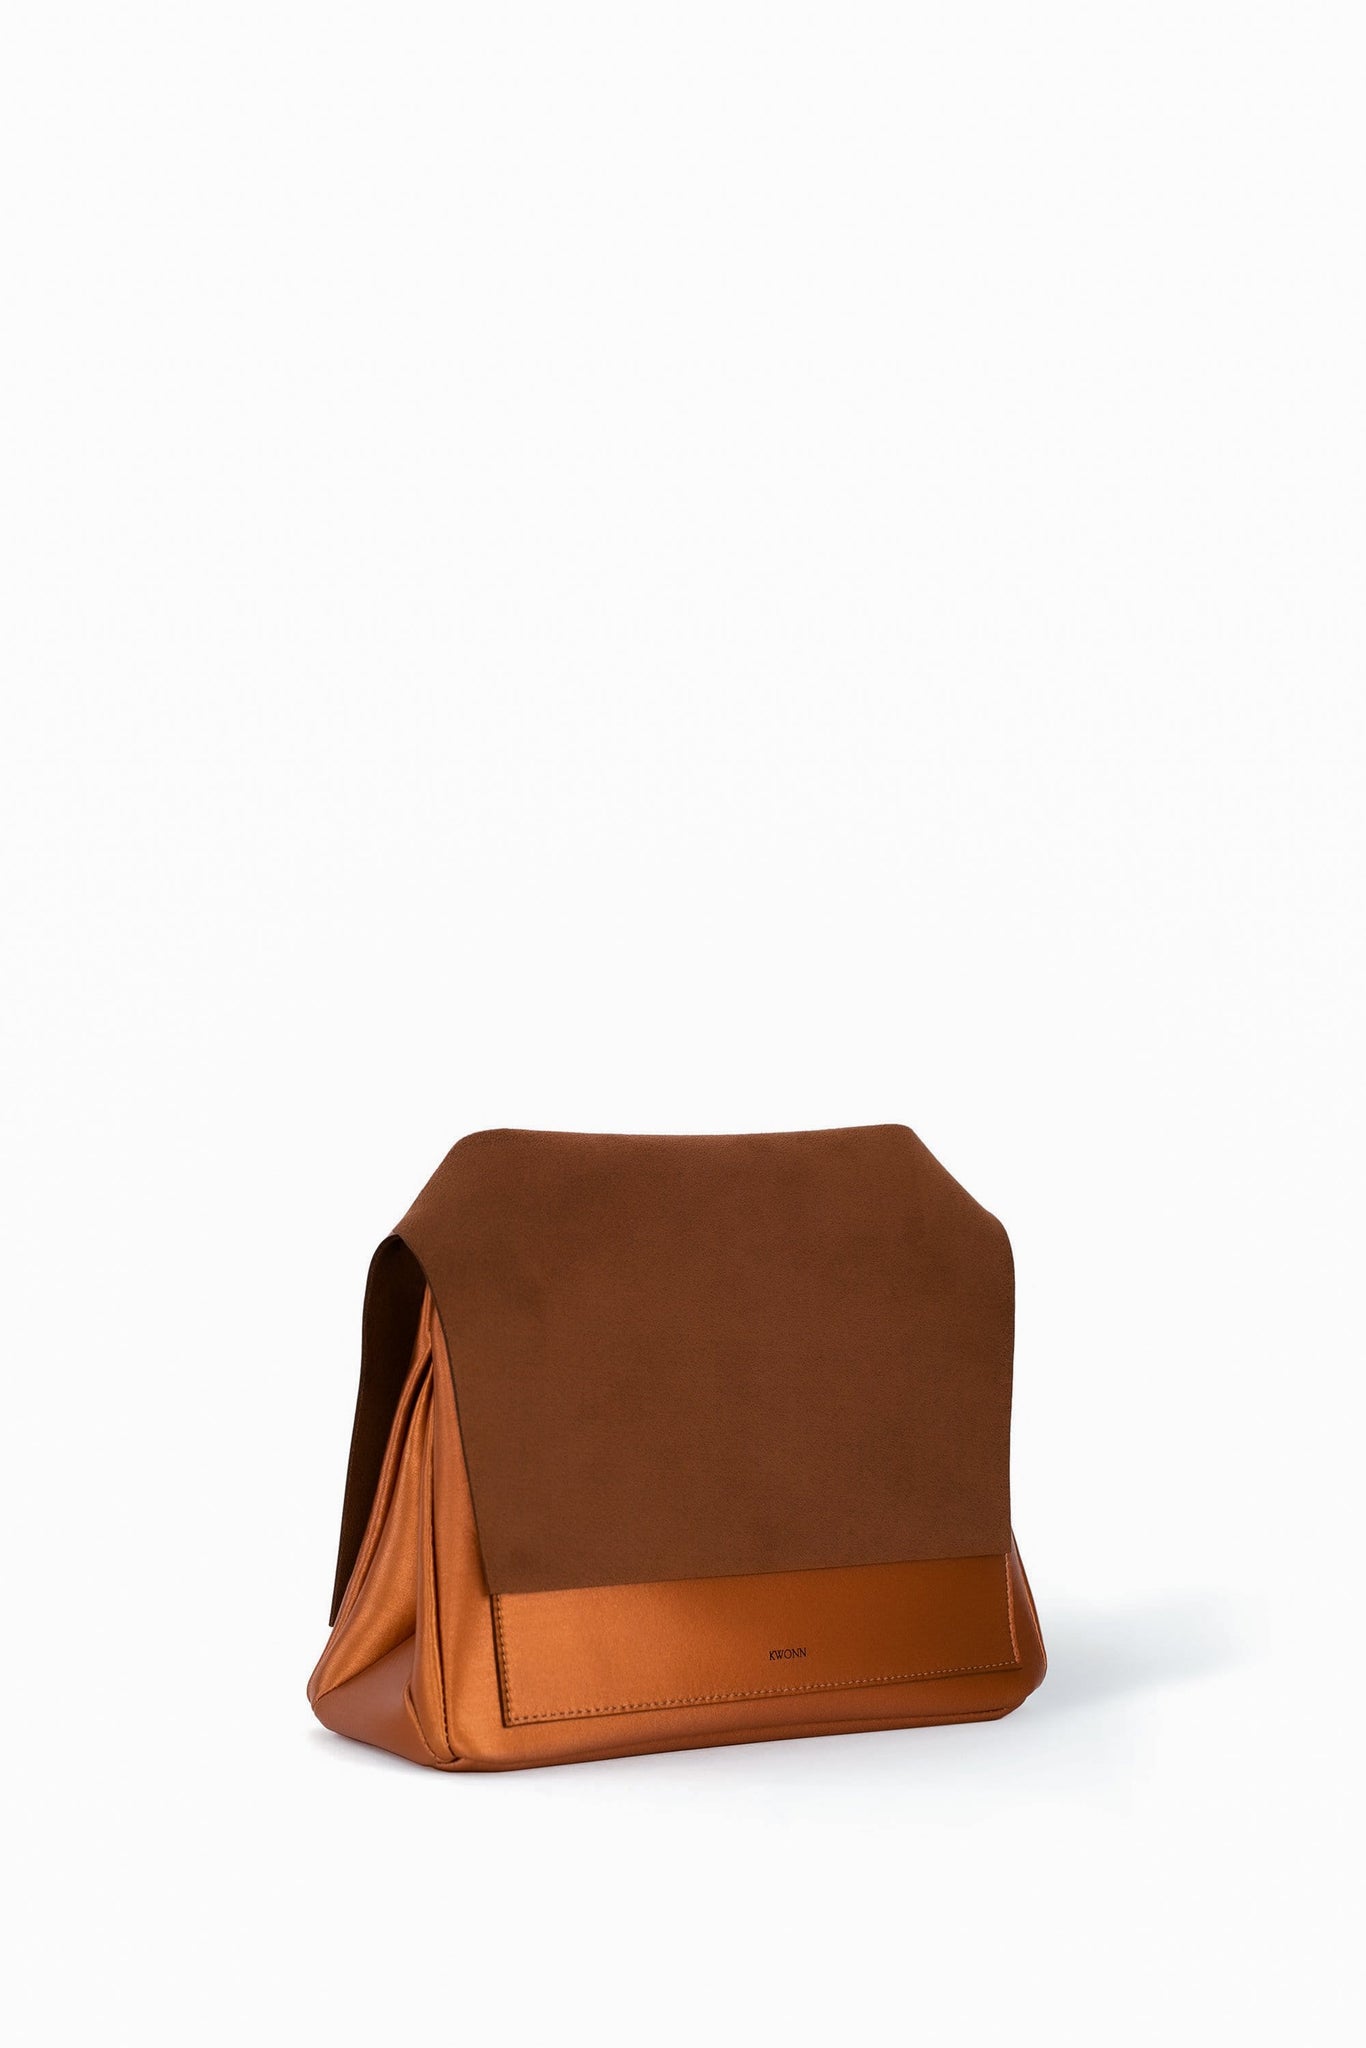 KWONN BAG Copper Crossbody vegan bags luxury bags handbags